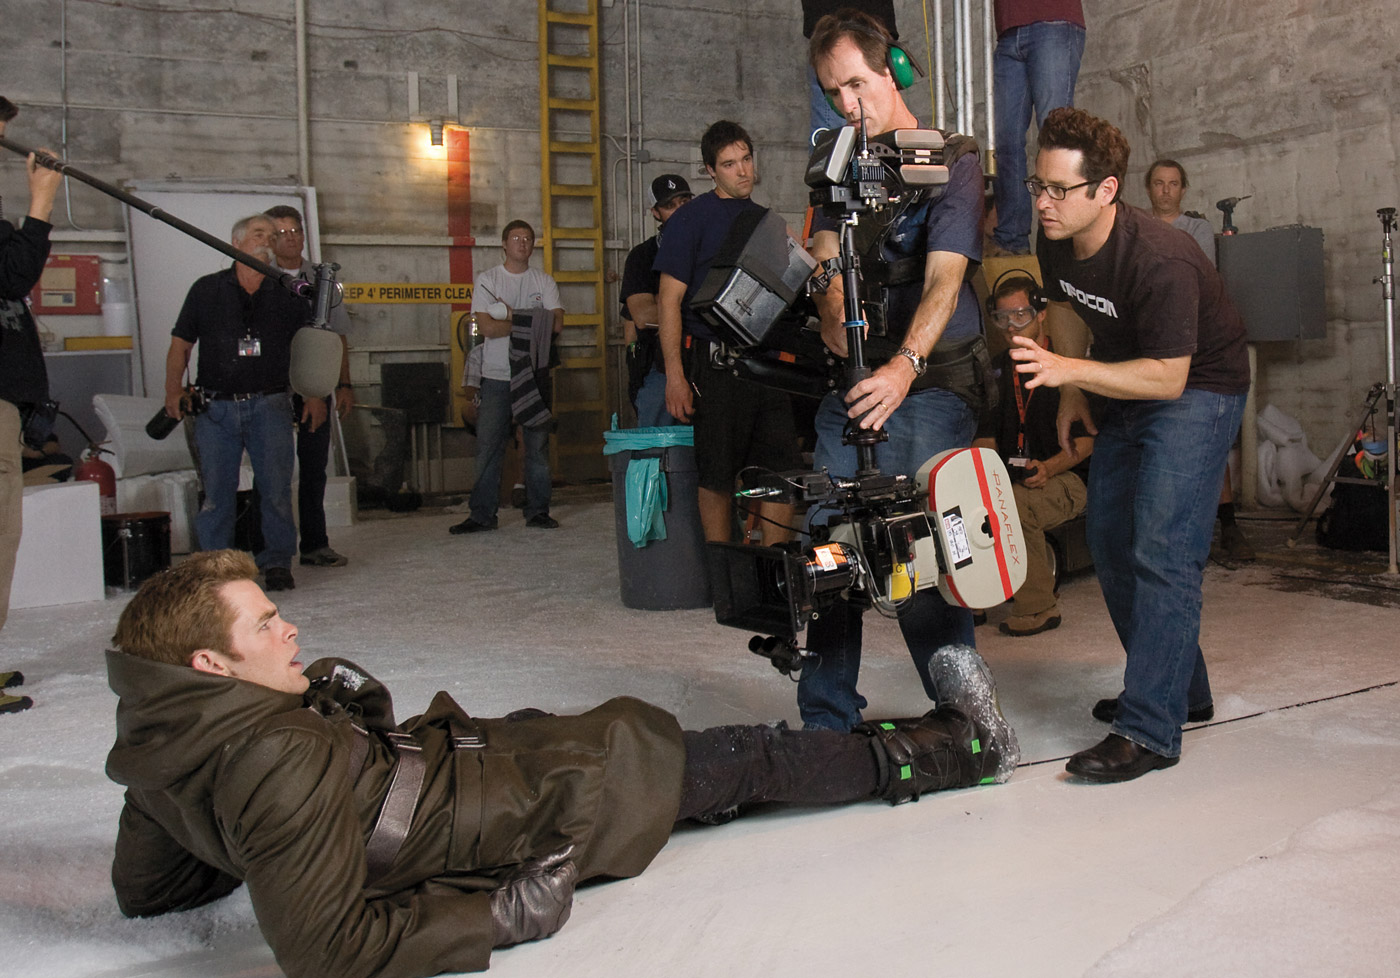 Abrams sets up a Steadicam shot on actor Chris Pine.